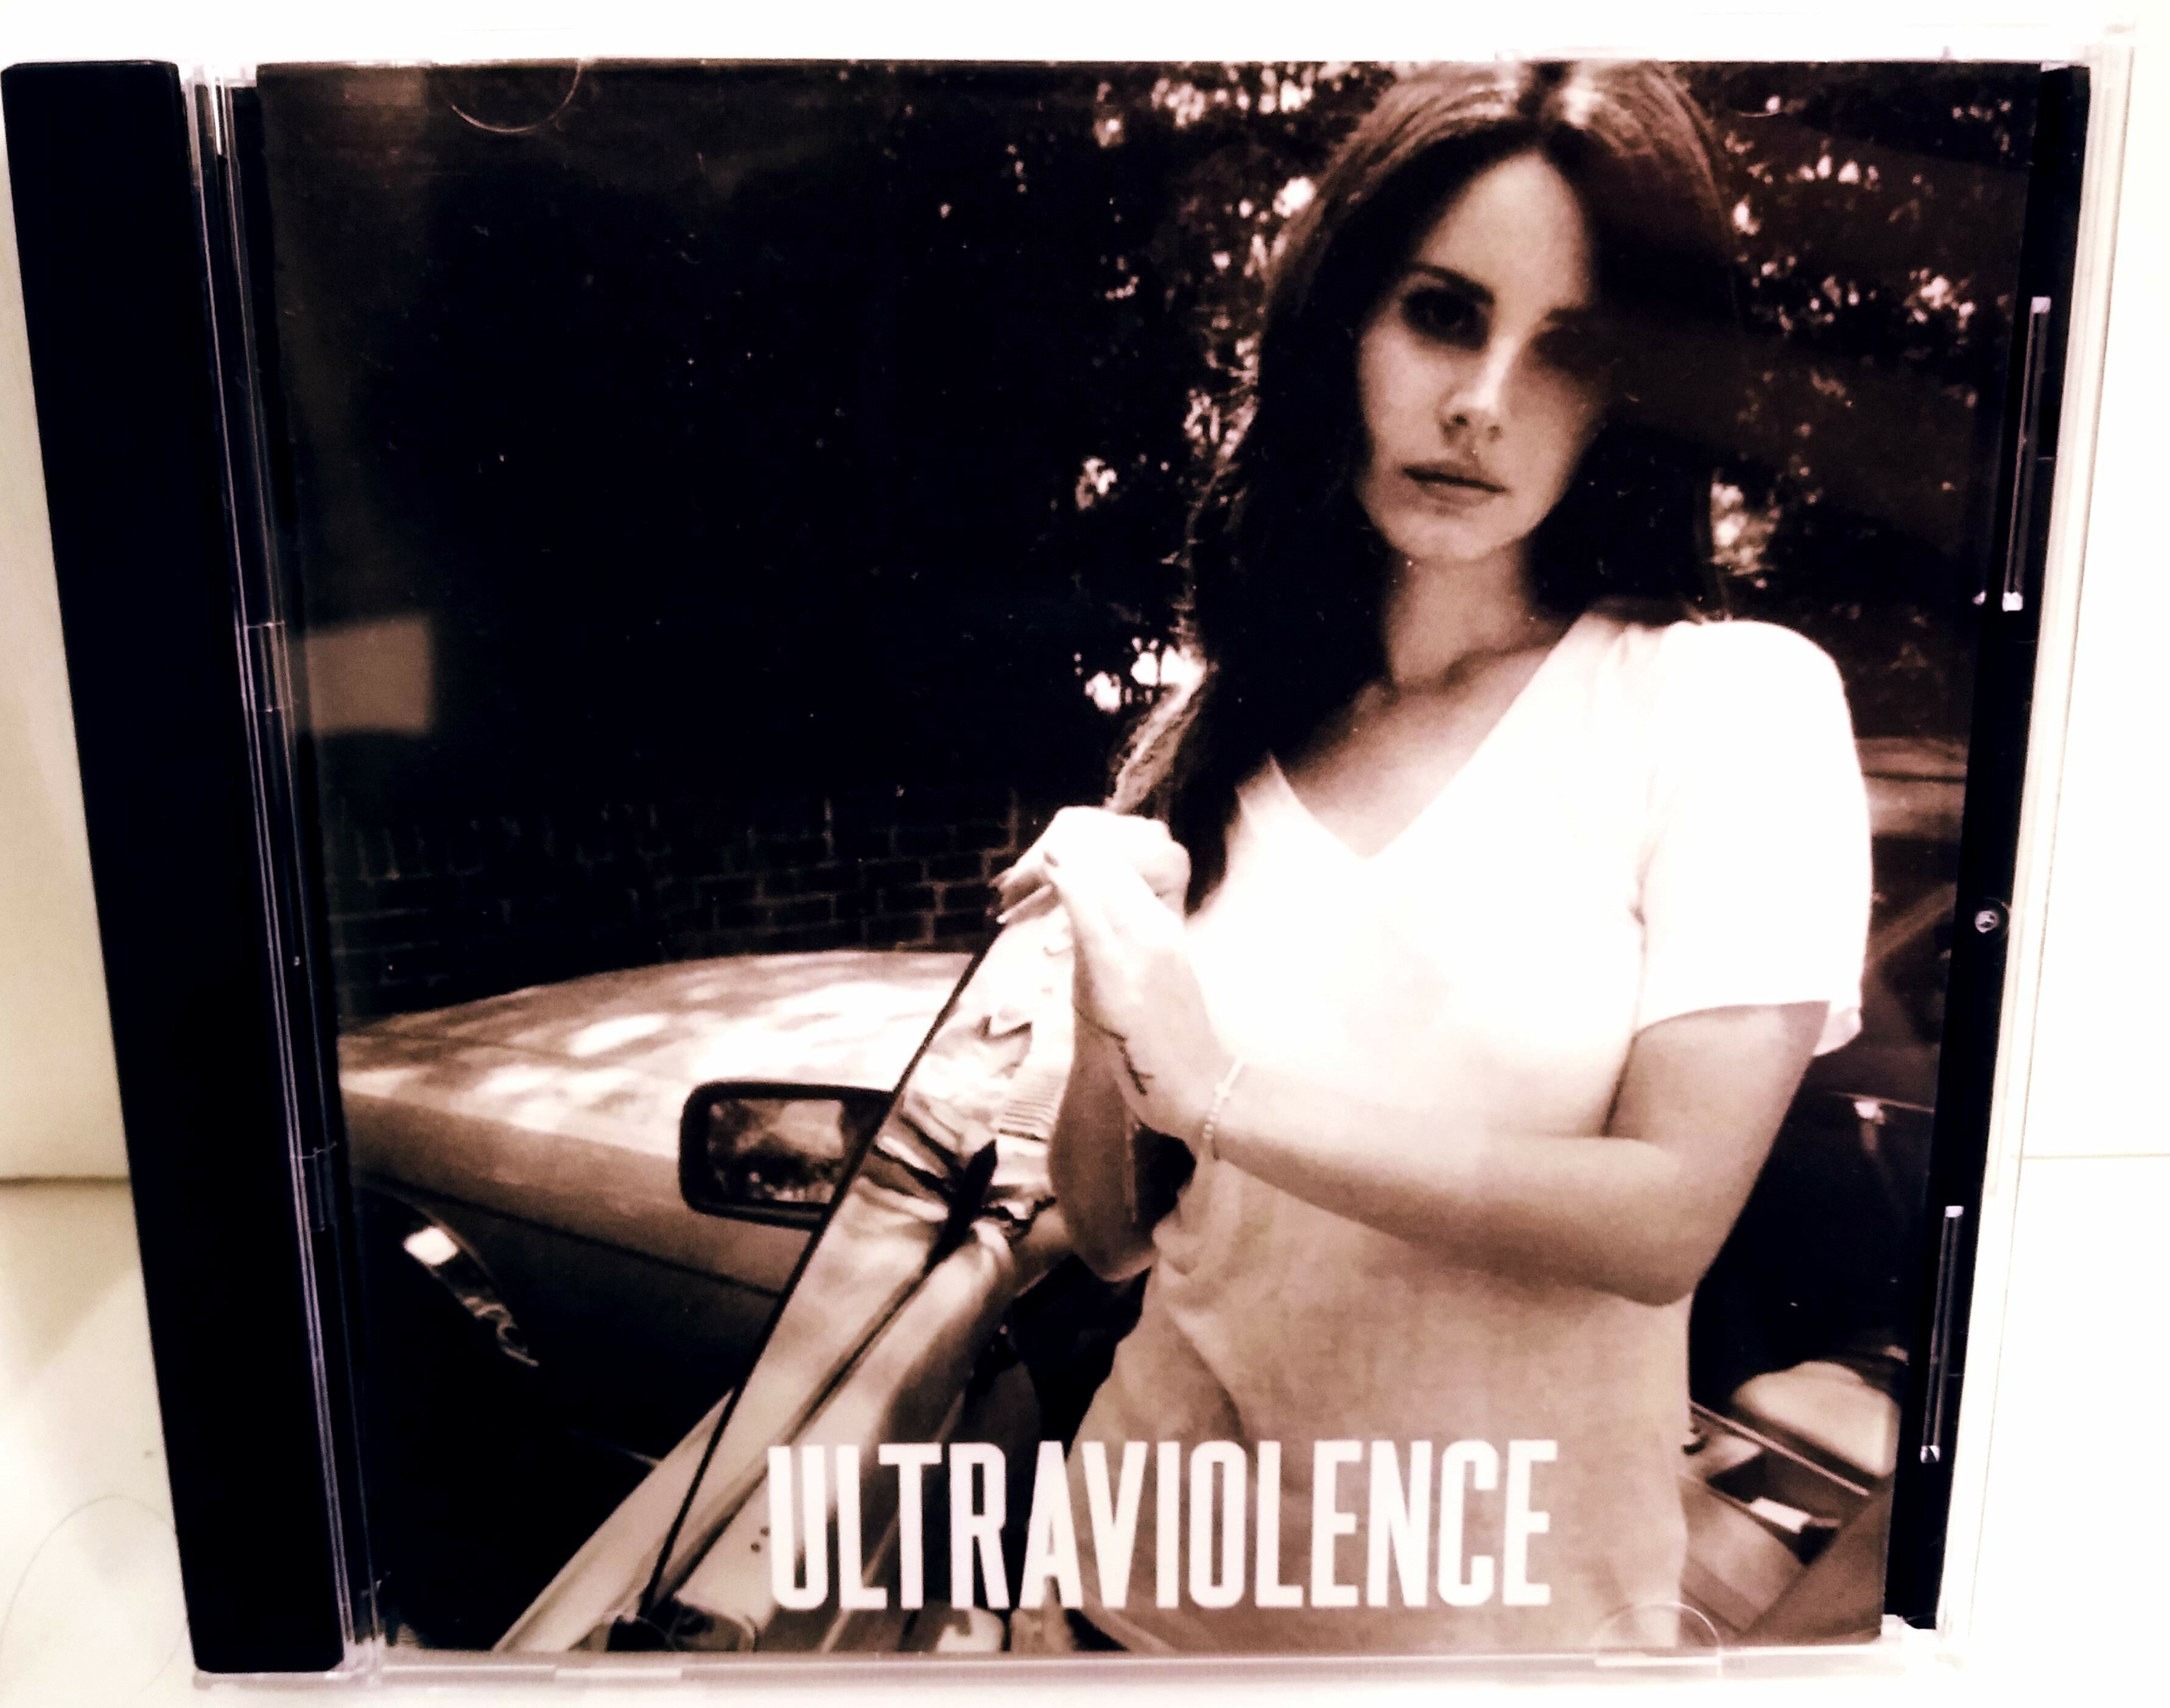 Lana Del Rey "Ultraviolence" CD